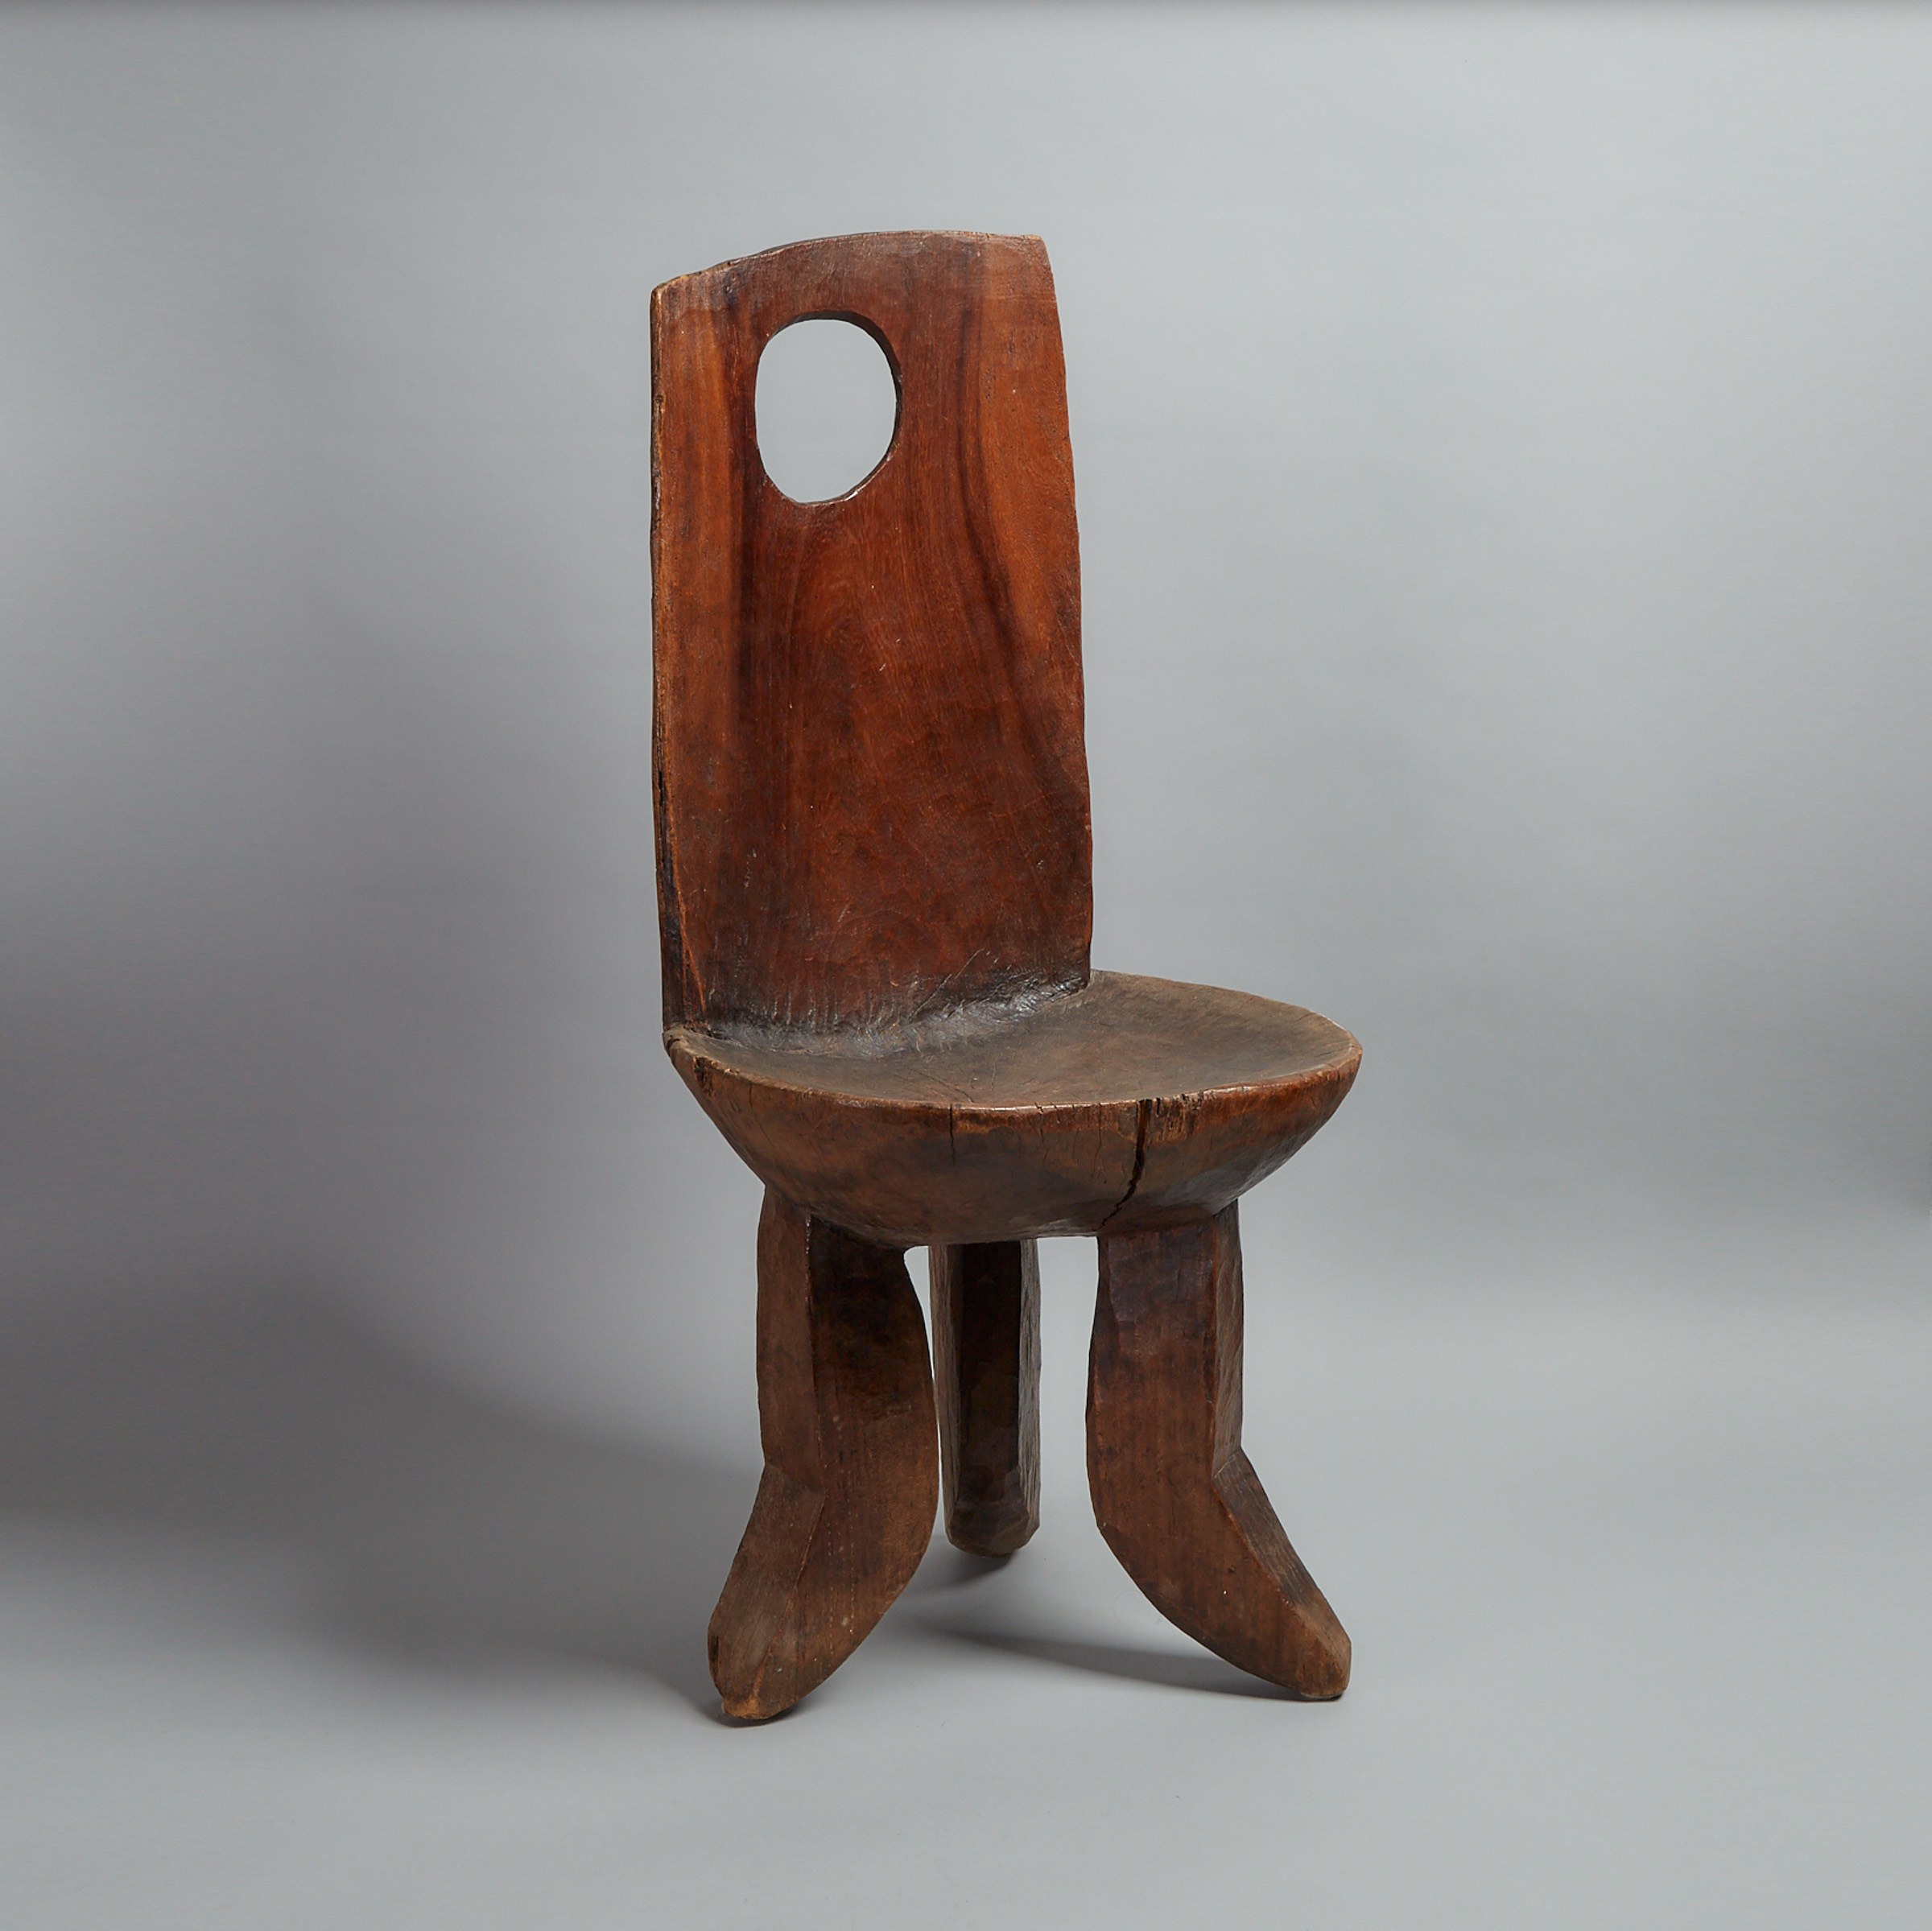 Jimma Chair, Ethiopia, East Africa